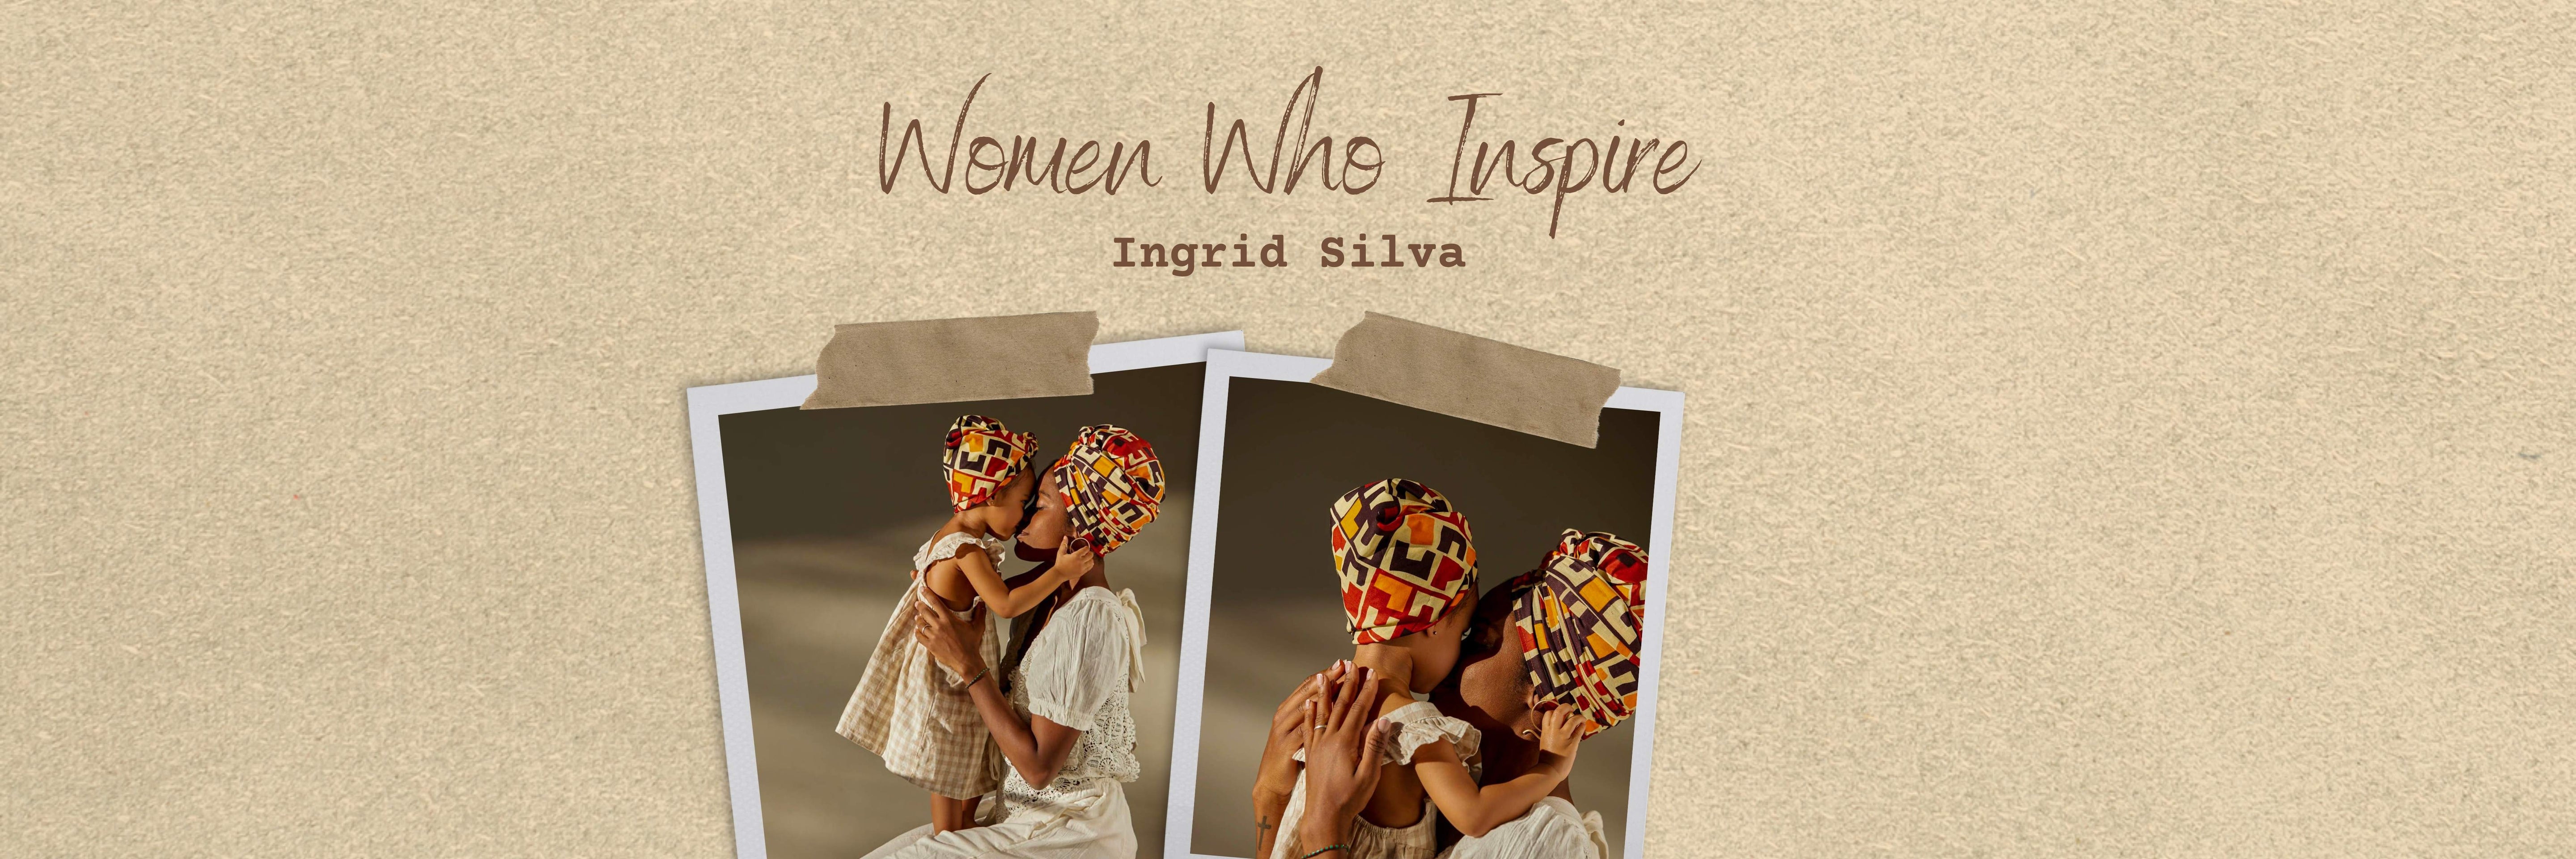 Women Who Inspire- Ingrid Silva